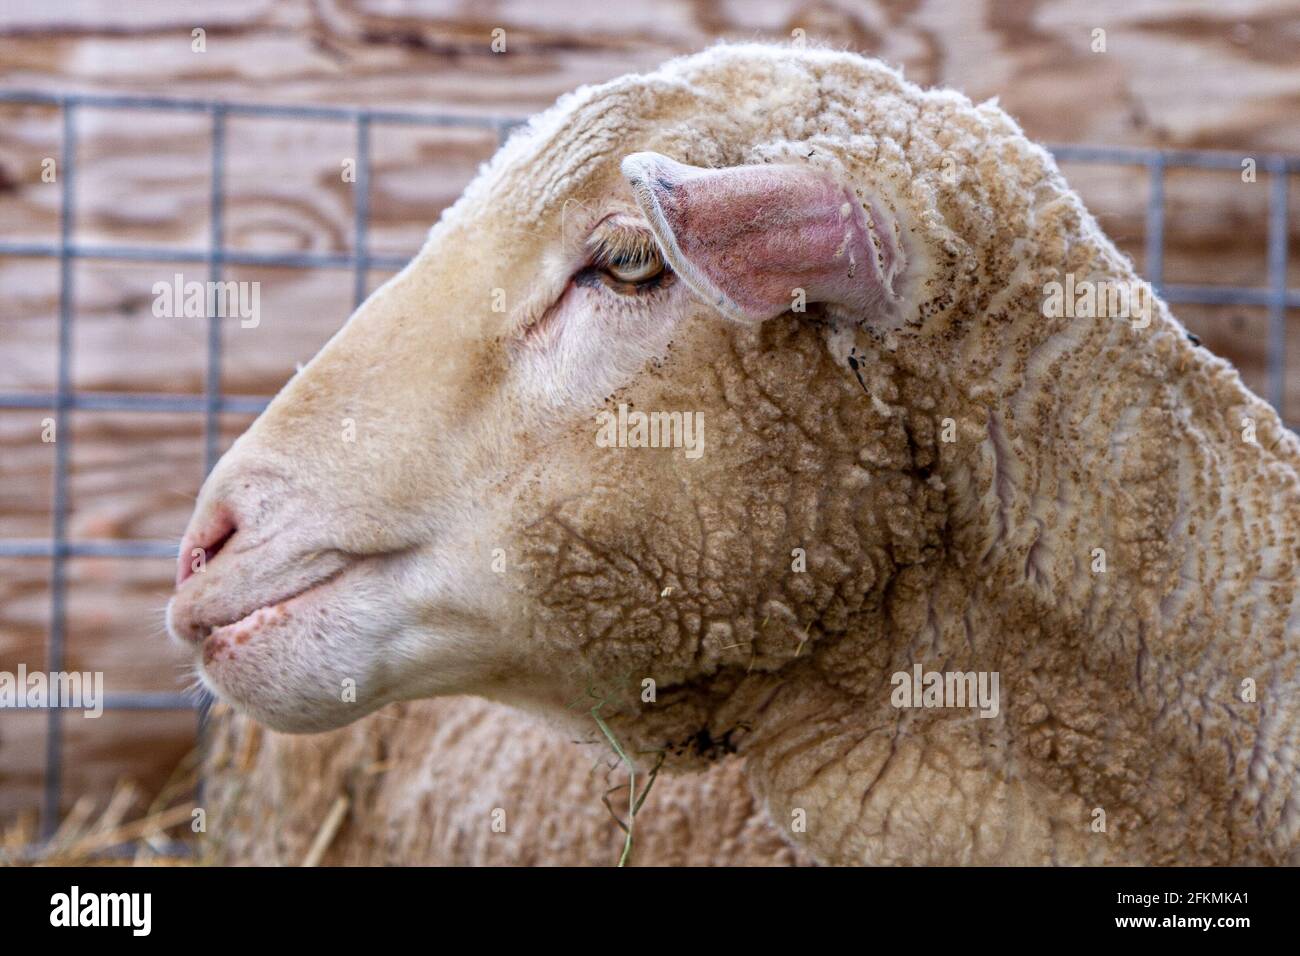 Un 'tiro de cabeza' de una oveja merino. Foto de stock